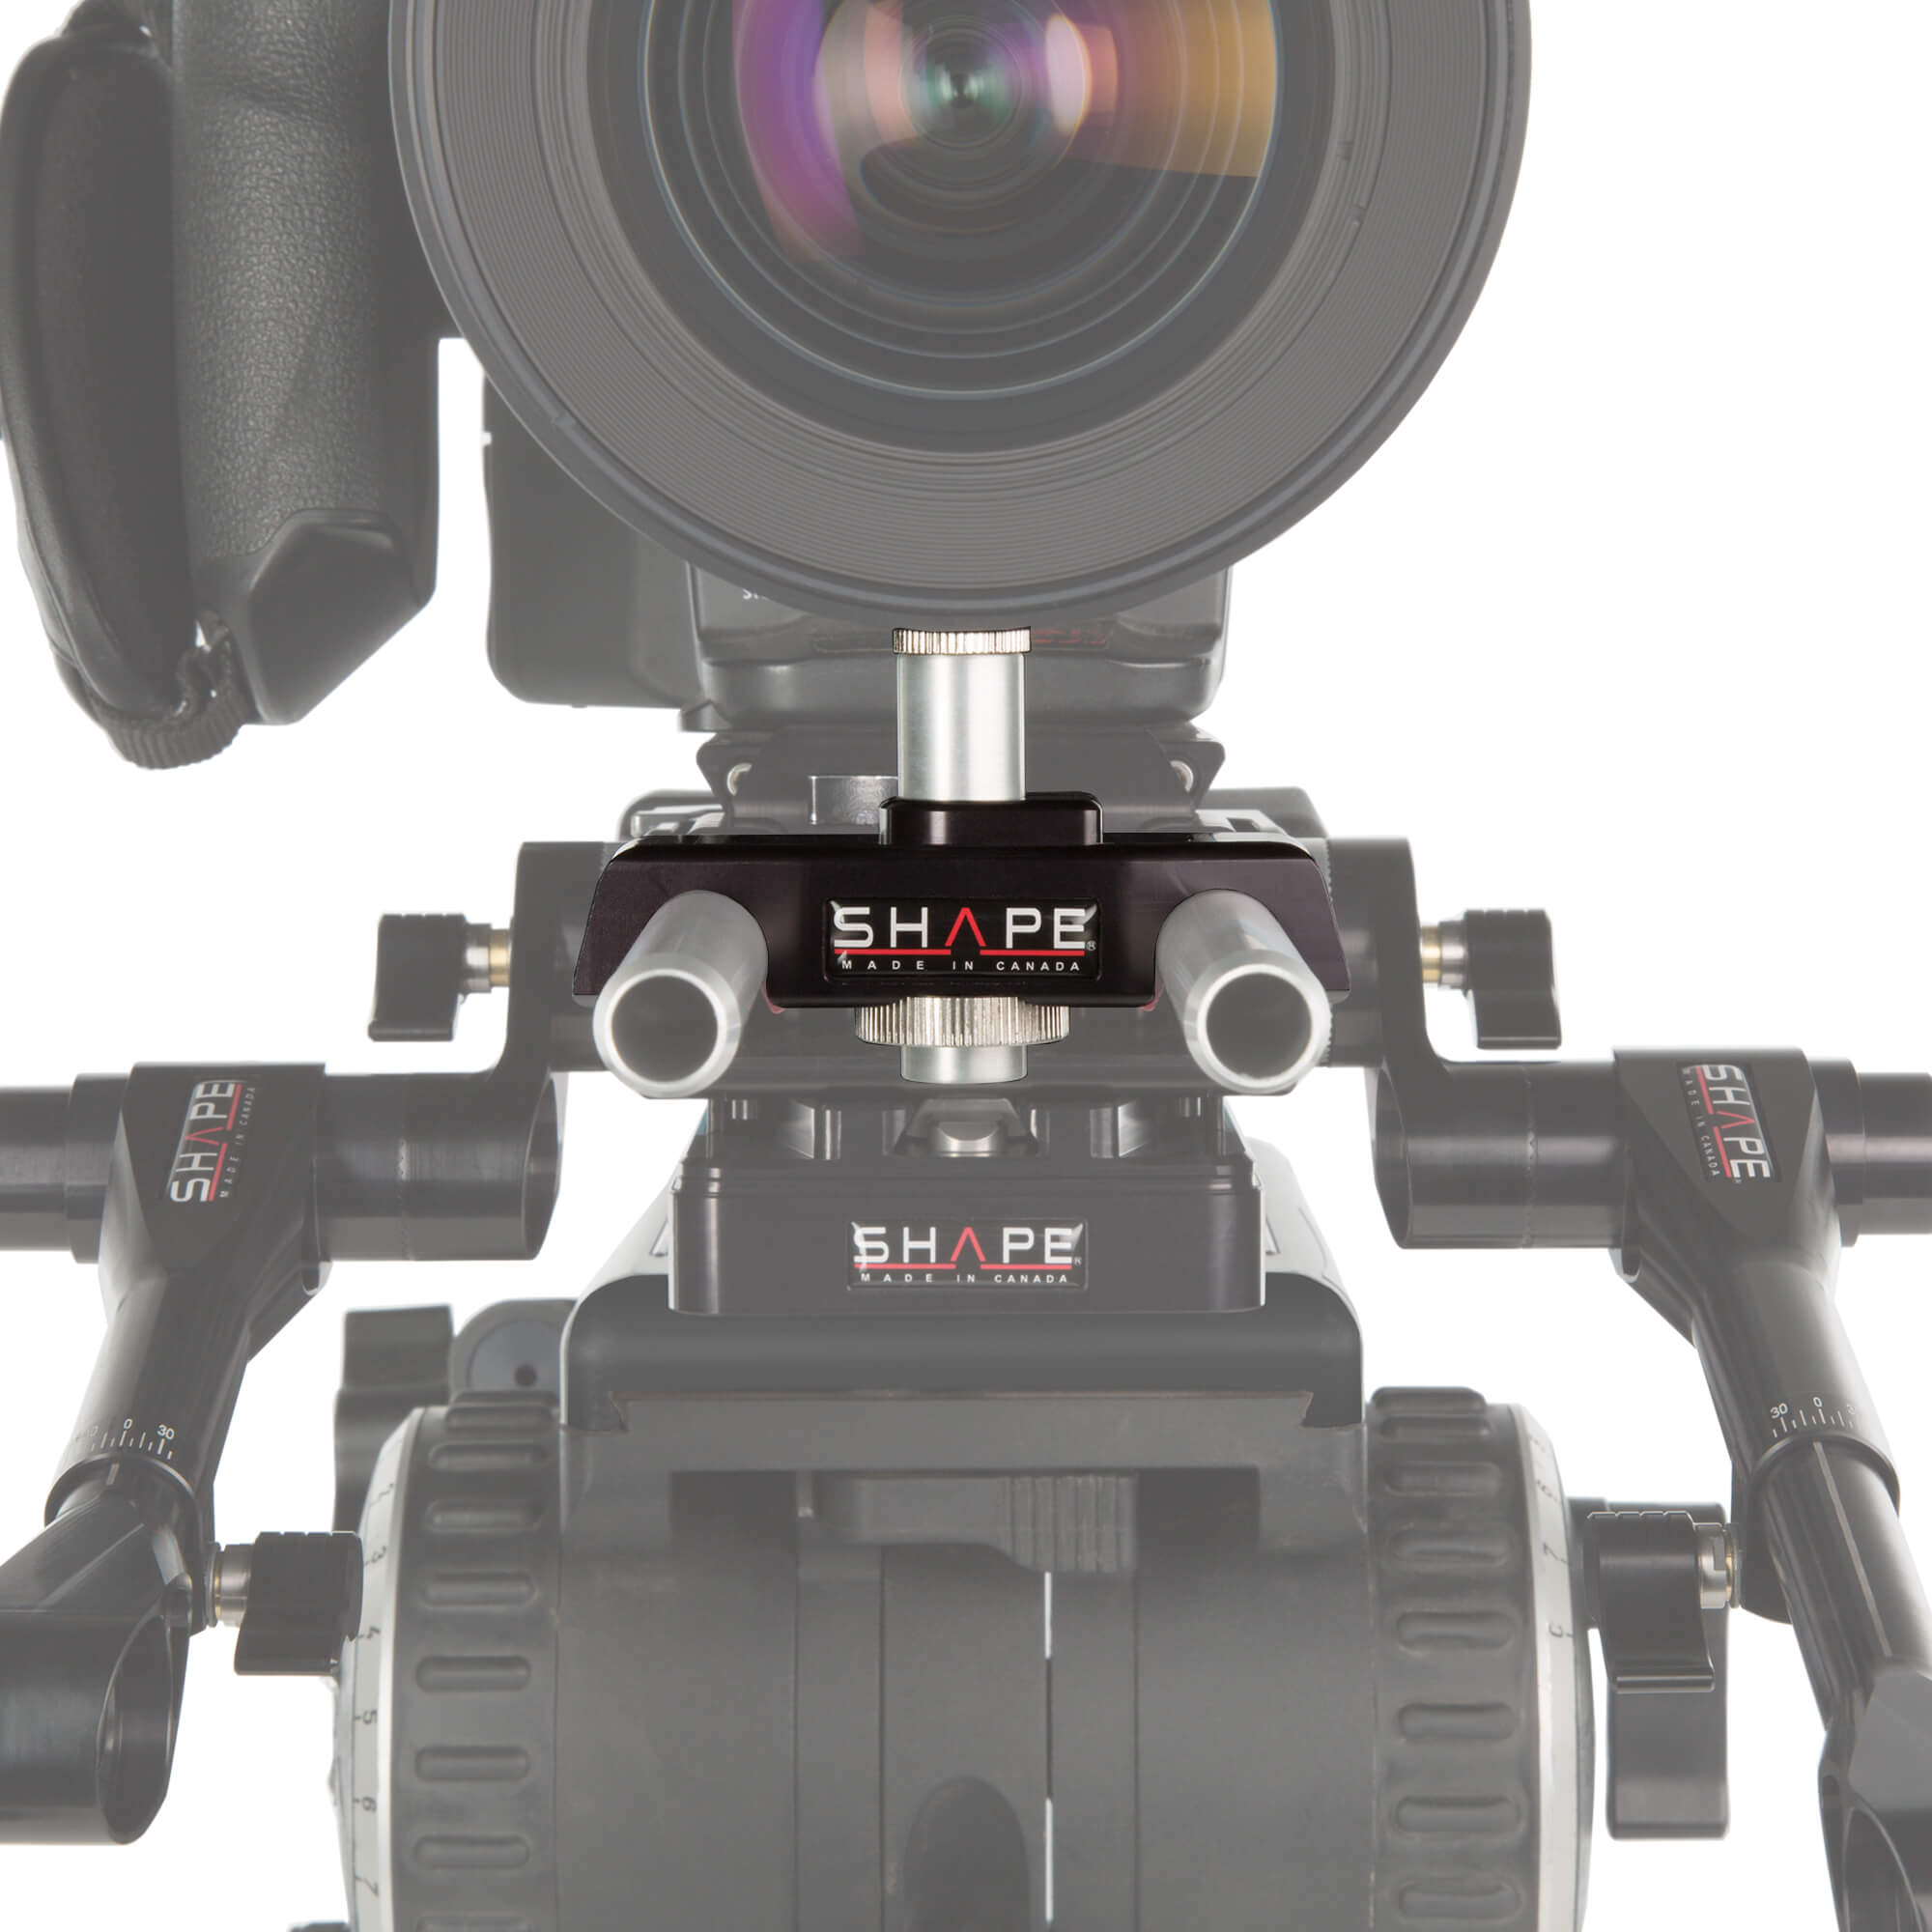 SHAPE Lens Support Pro Universal